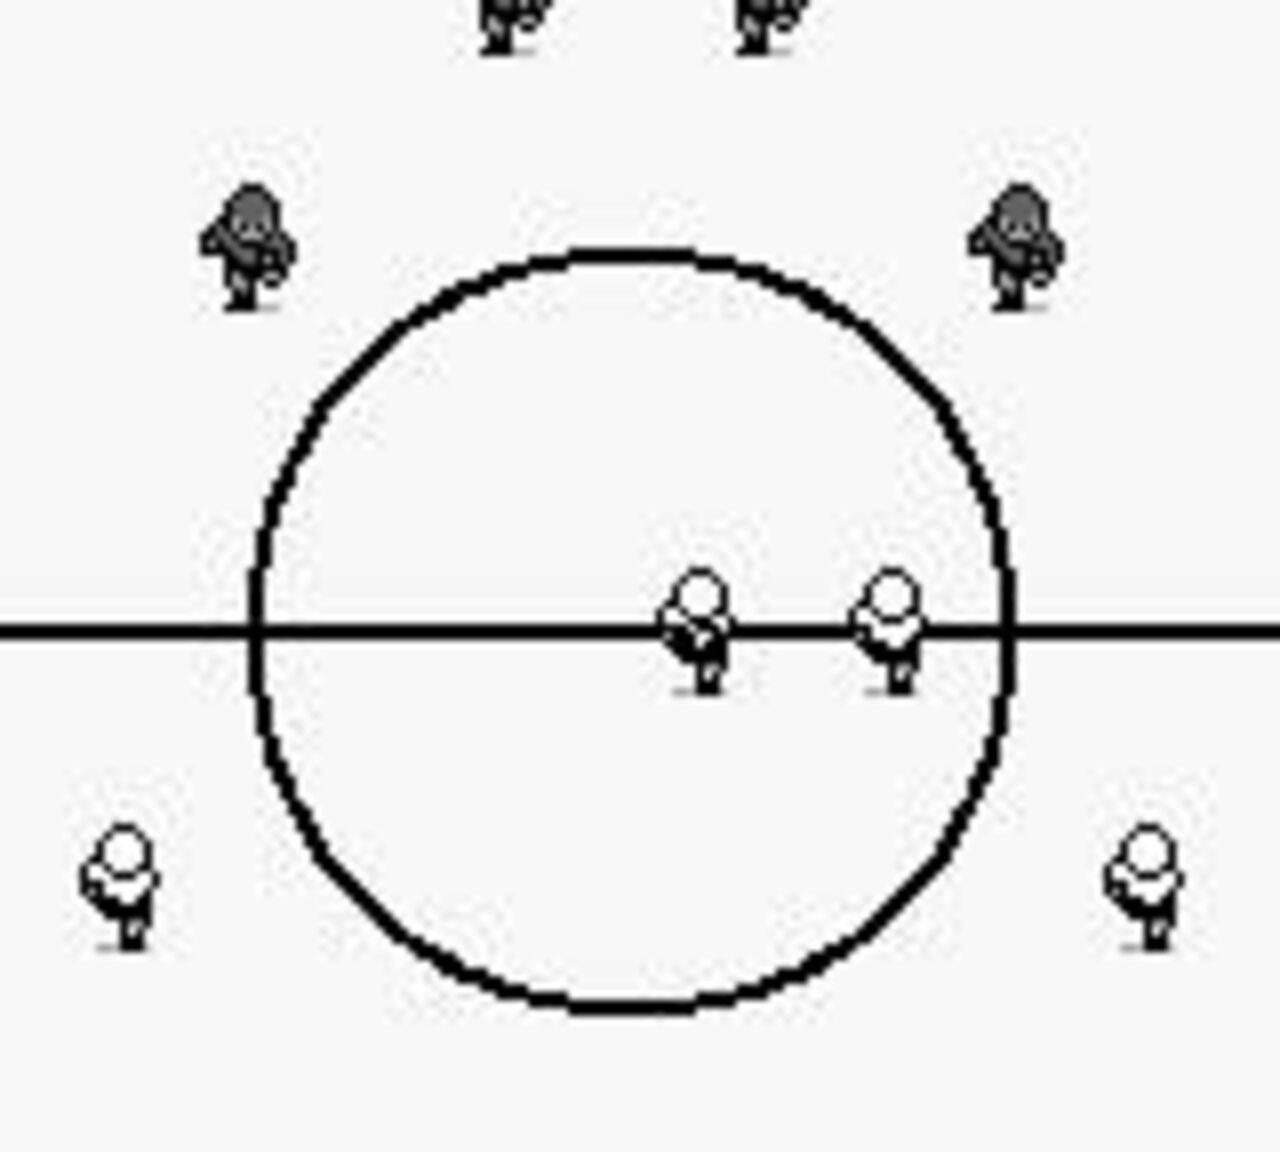 Soccer (1985) Game Boy